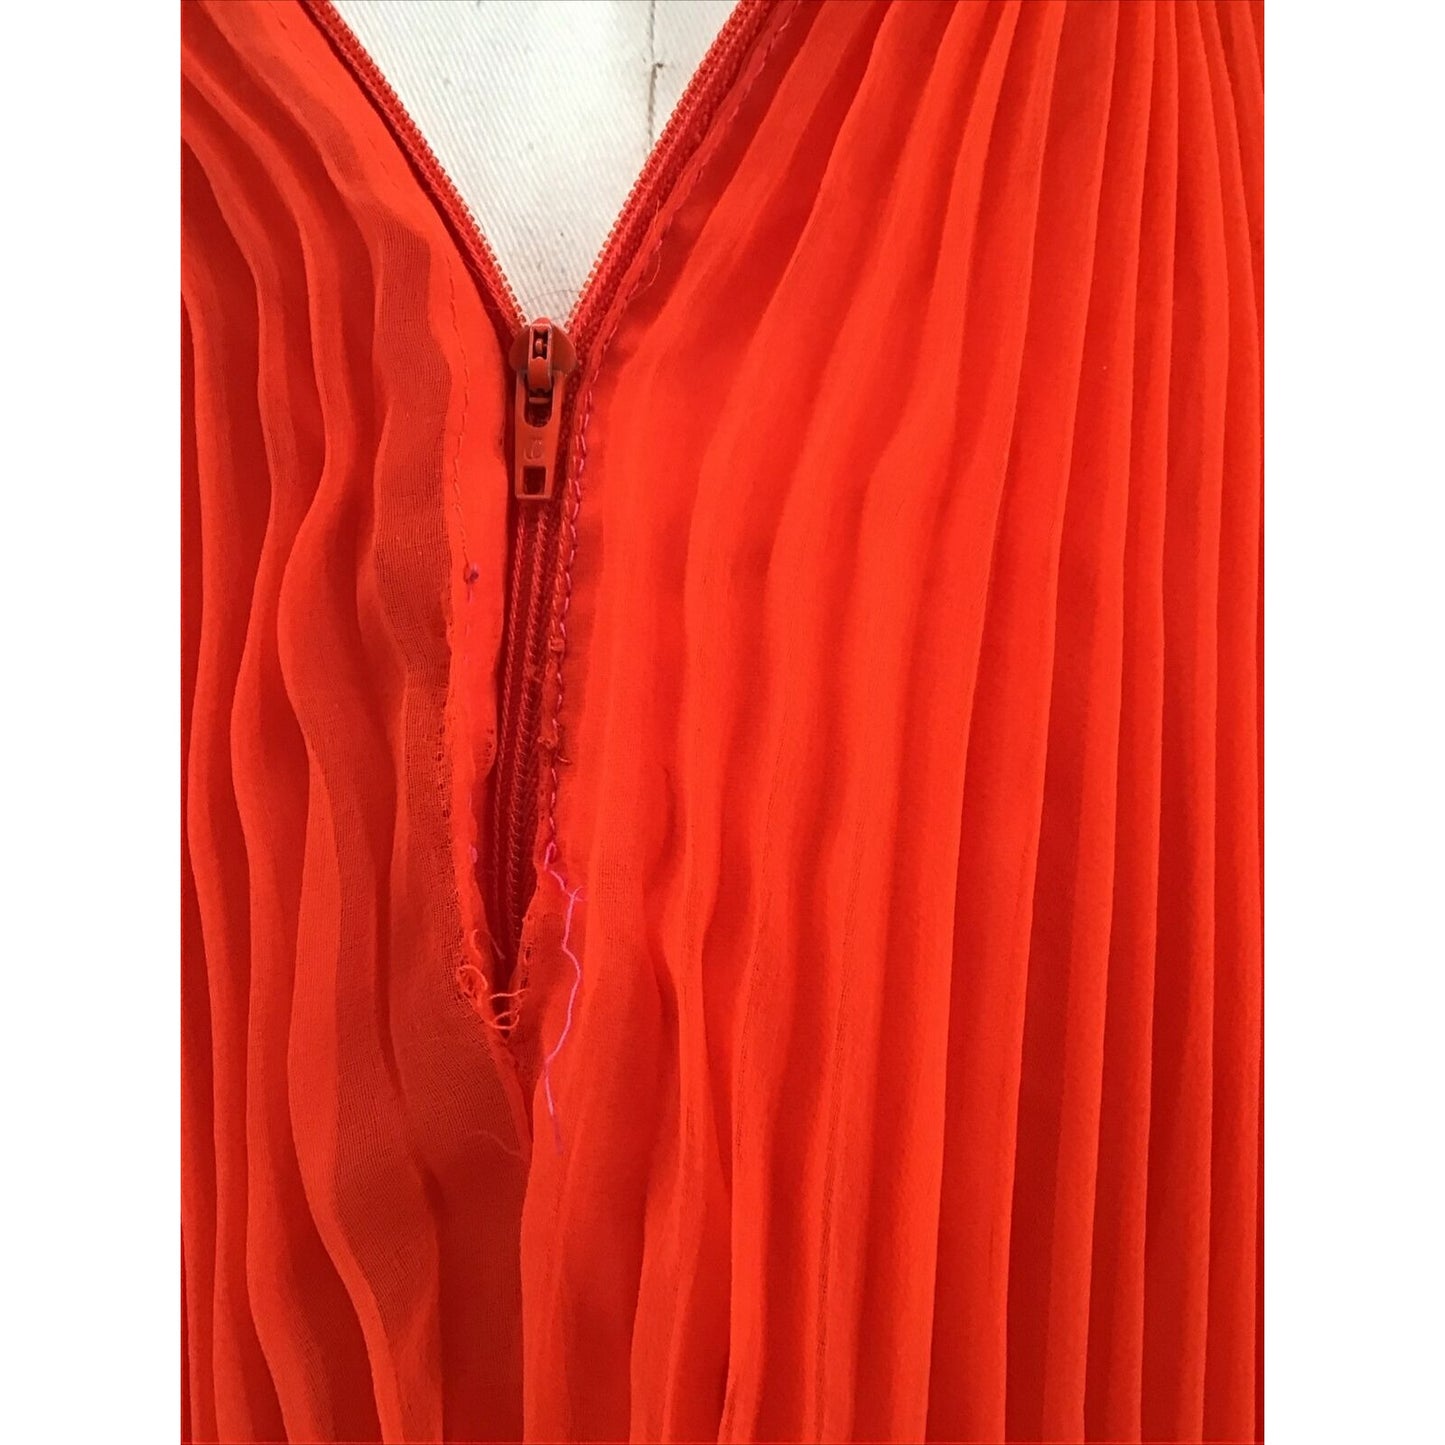 VTG 60s Jack Bryan California Silk Chiffon Orange Cocktail Dress